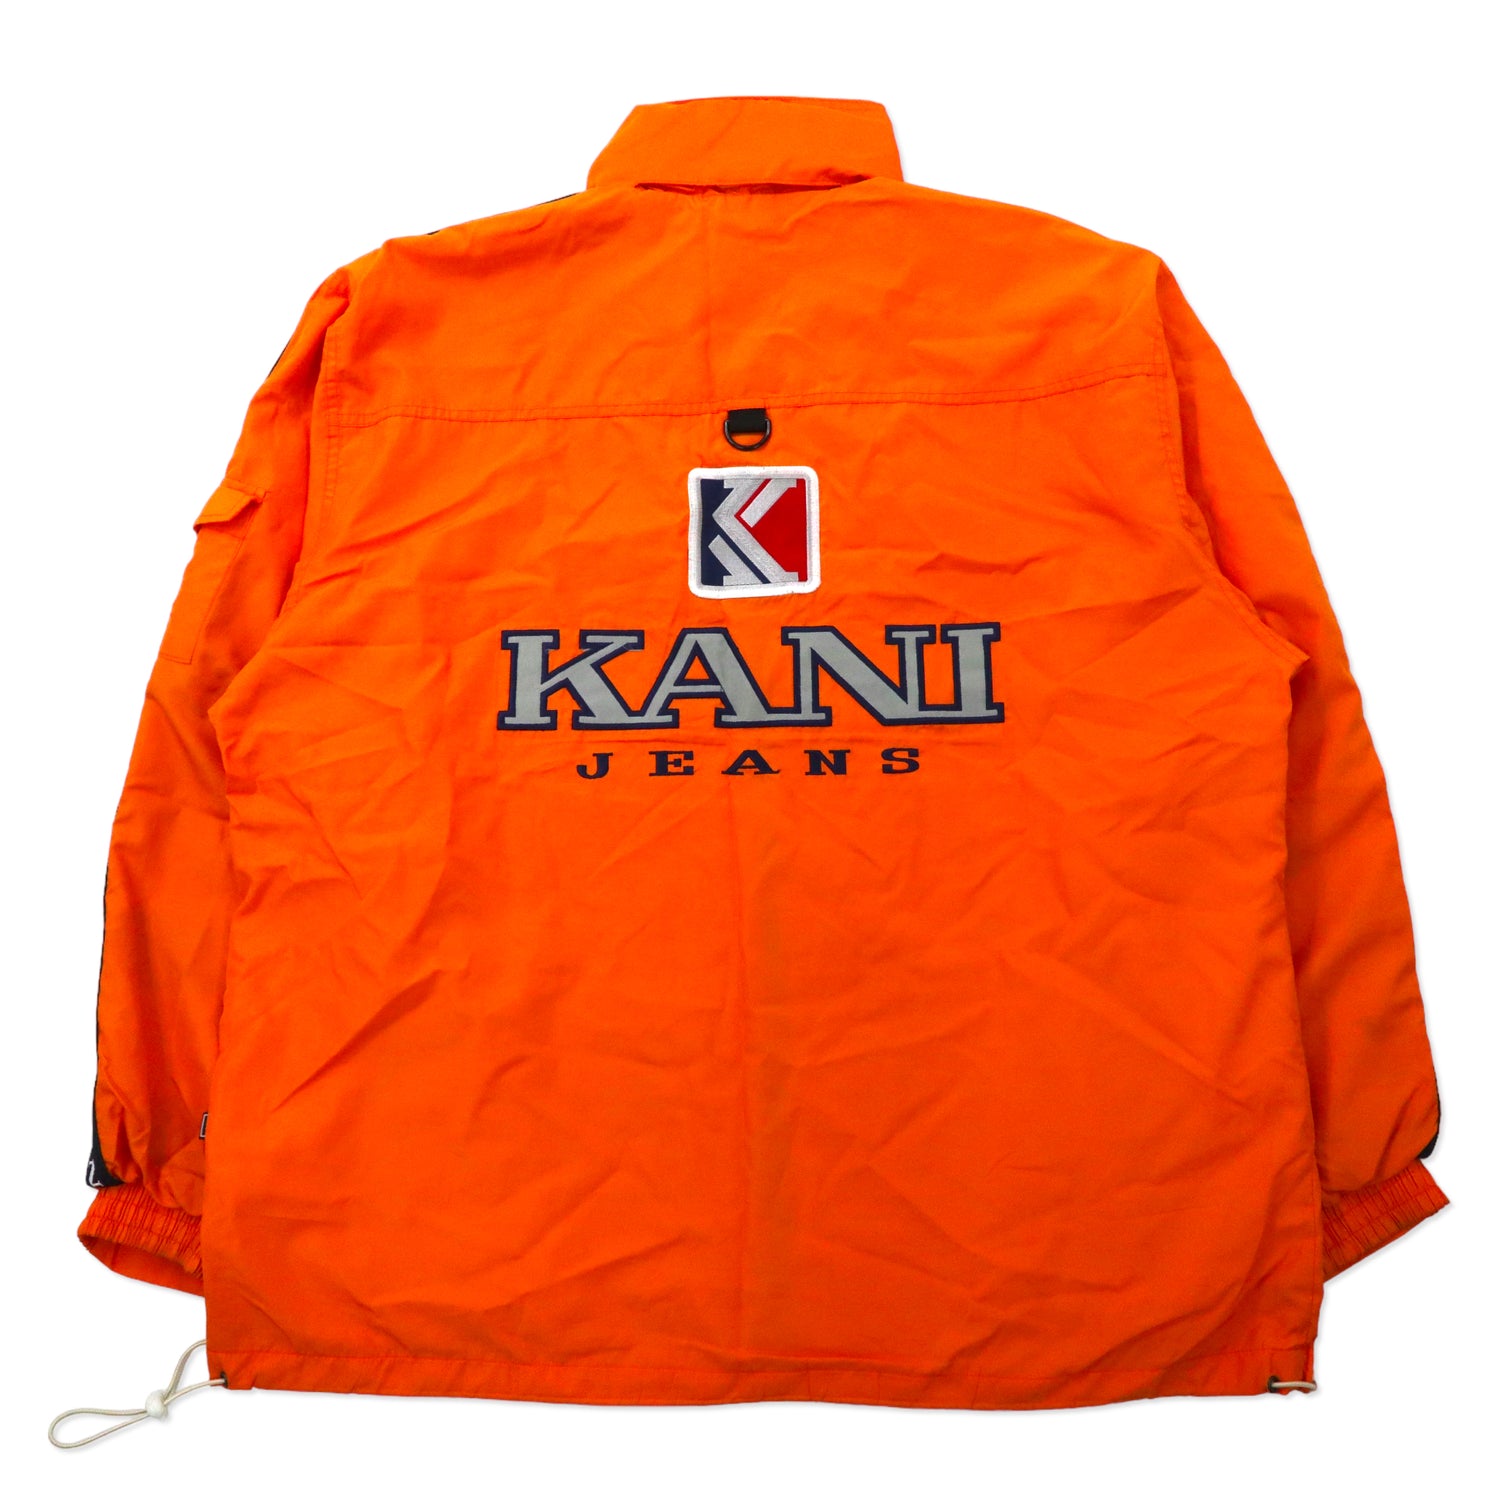 Kani Jeans KARL KANI s Big Size Windbreaker XL Orange Back